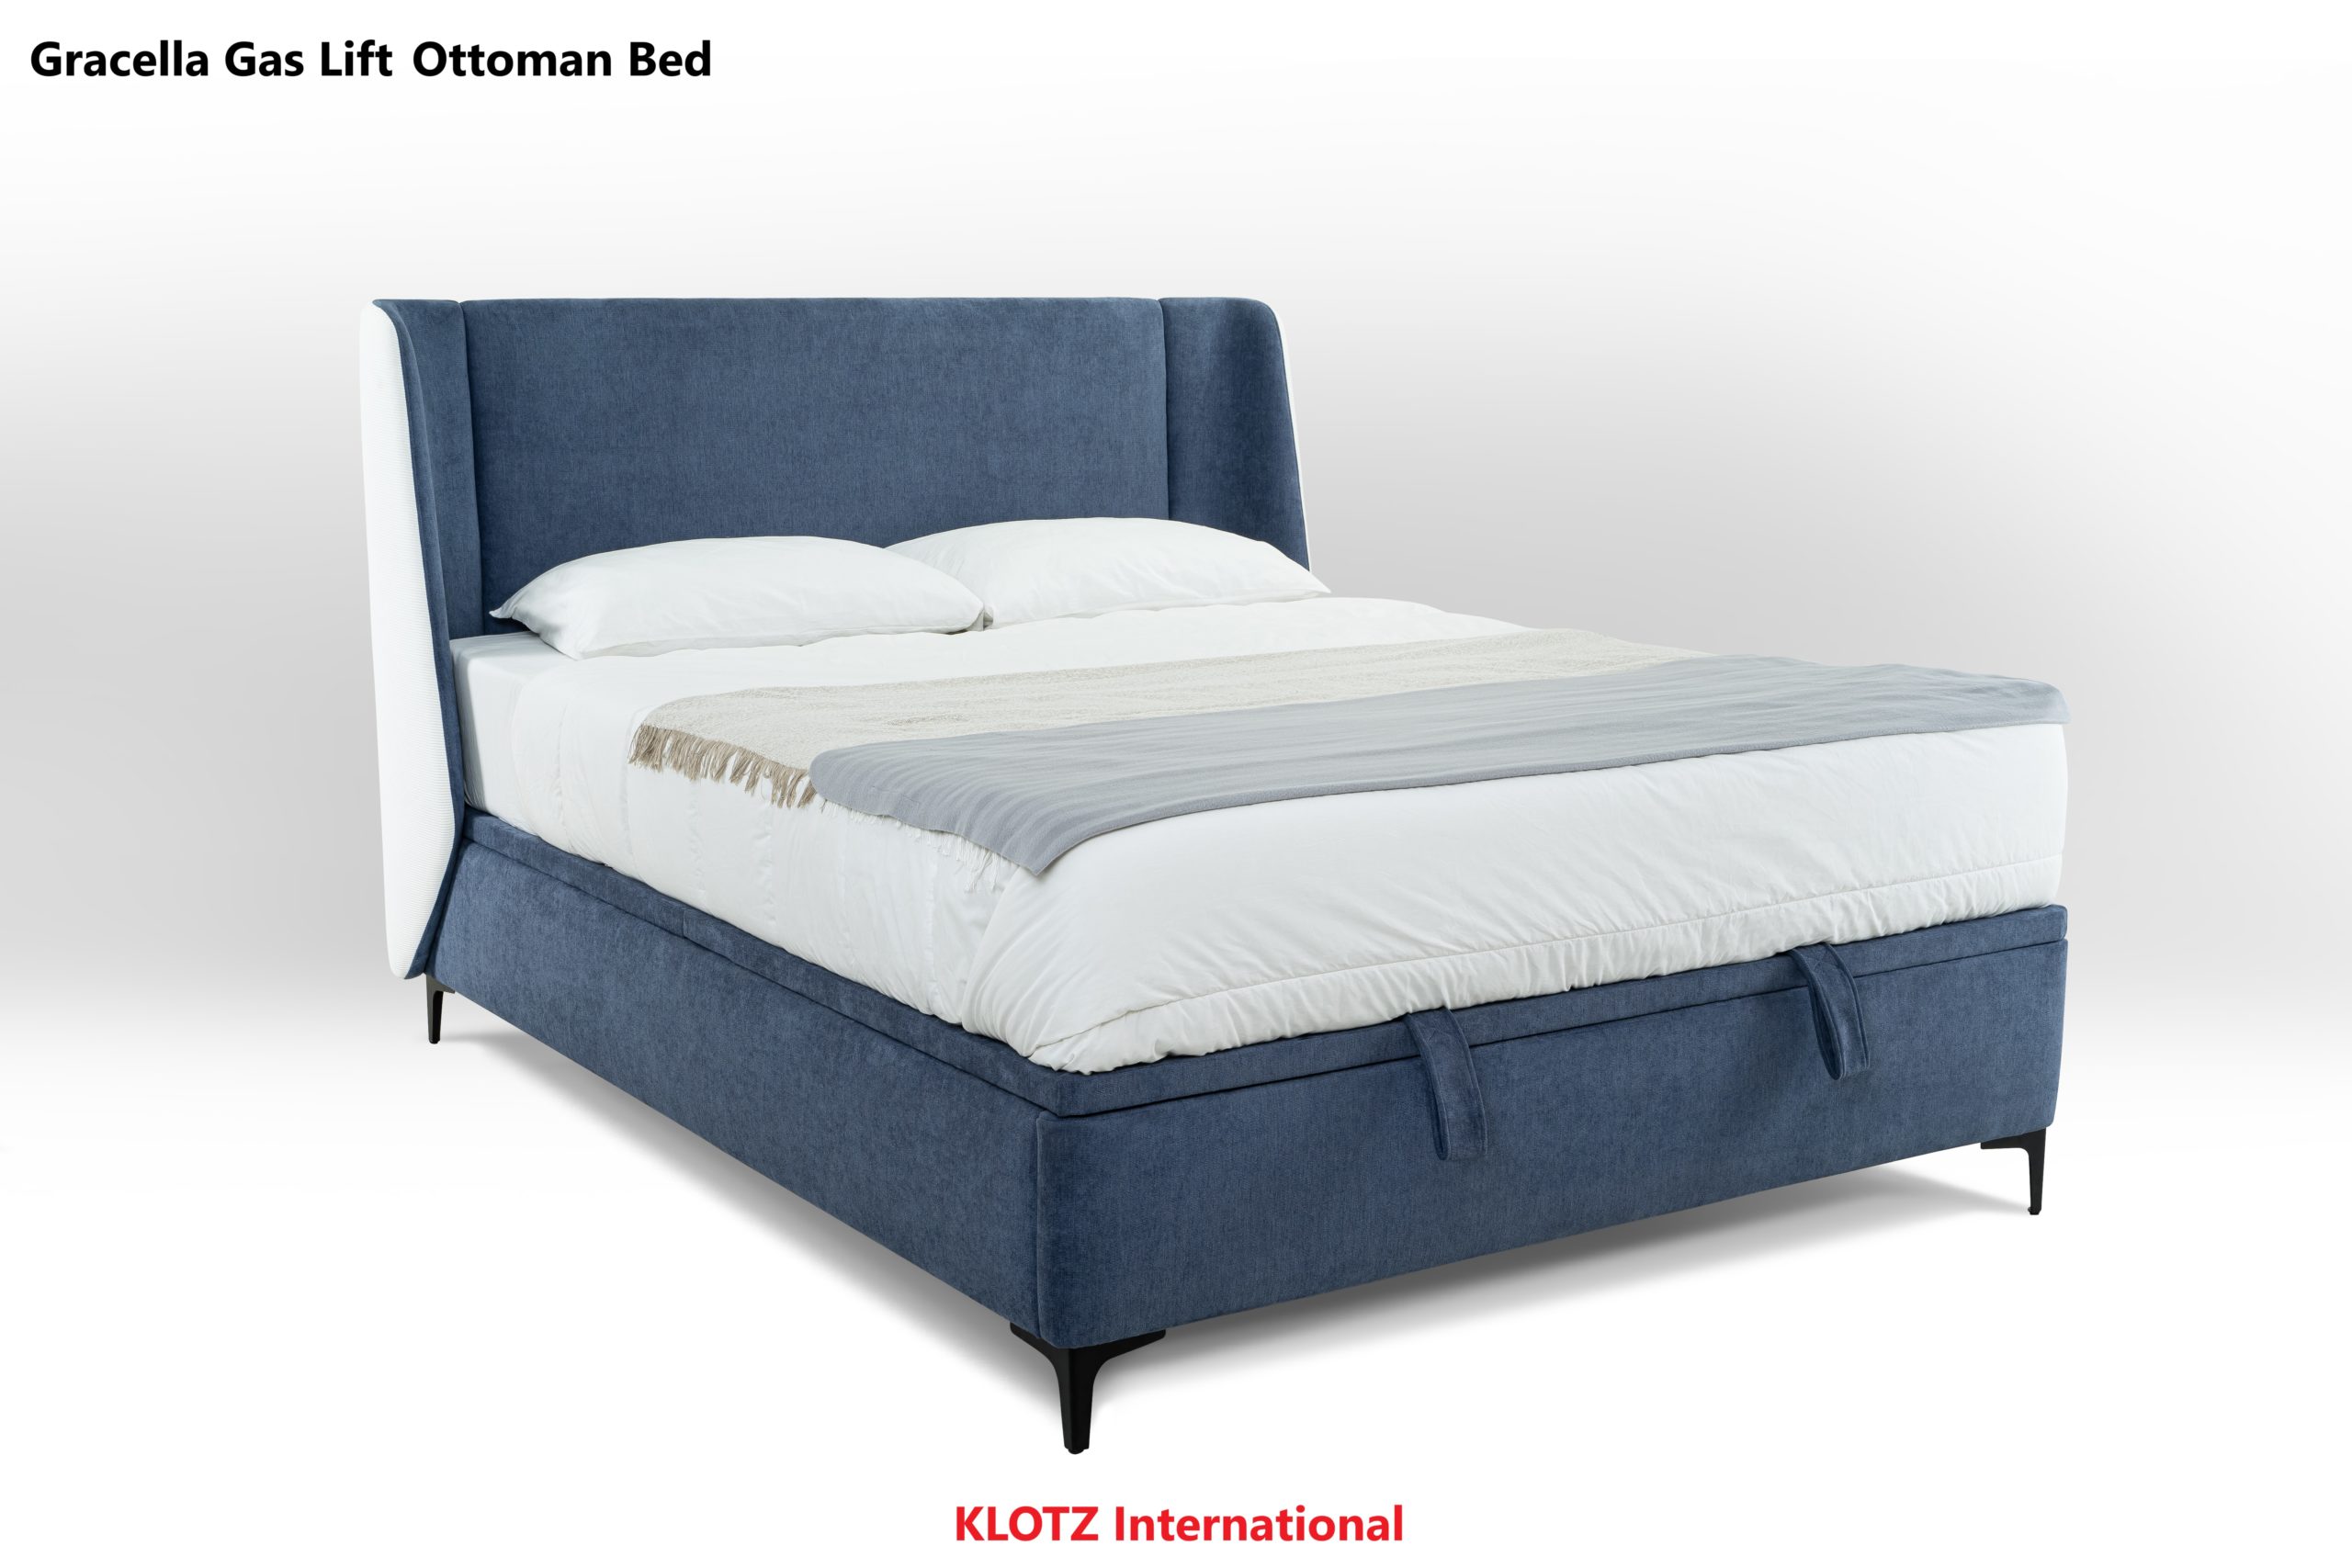 Klotz Gracella Ottoman Bed 10a7b173df2e6230b5315cd3655b34db scaled